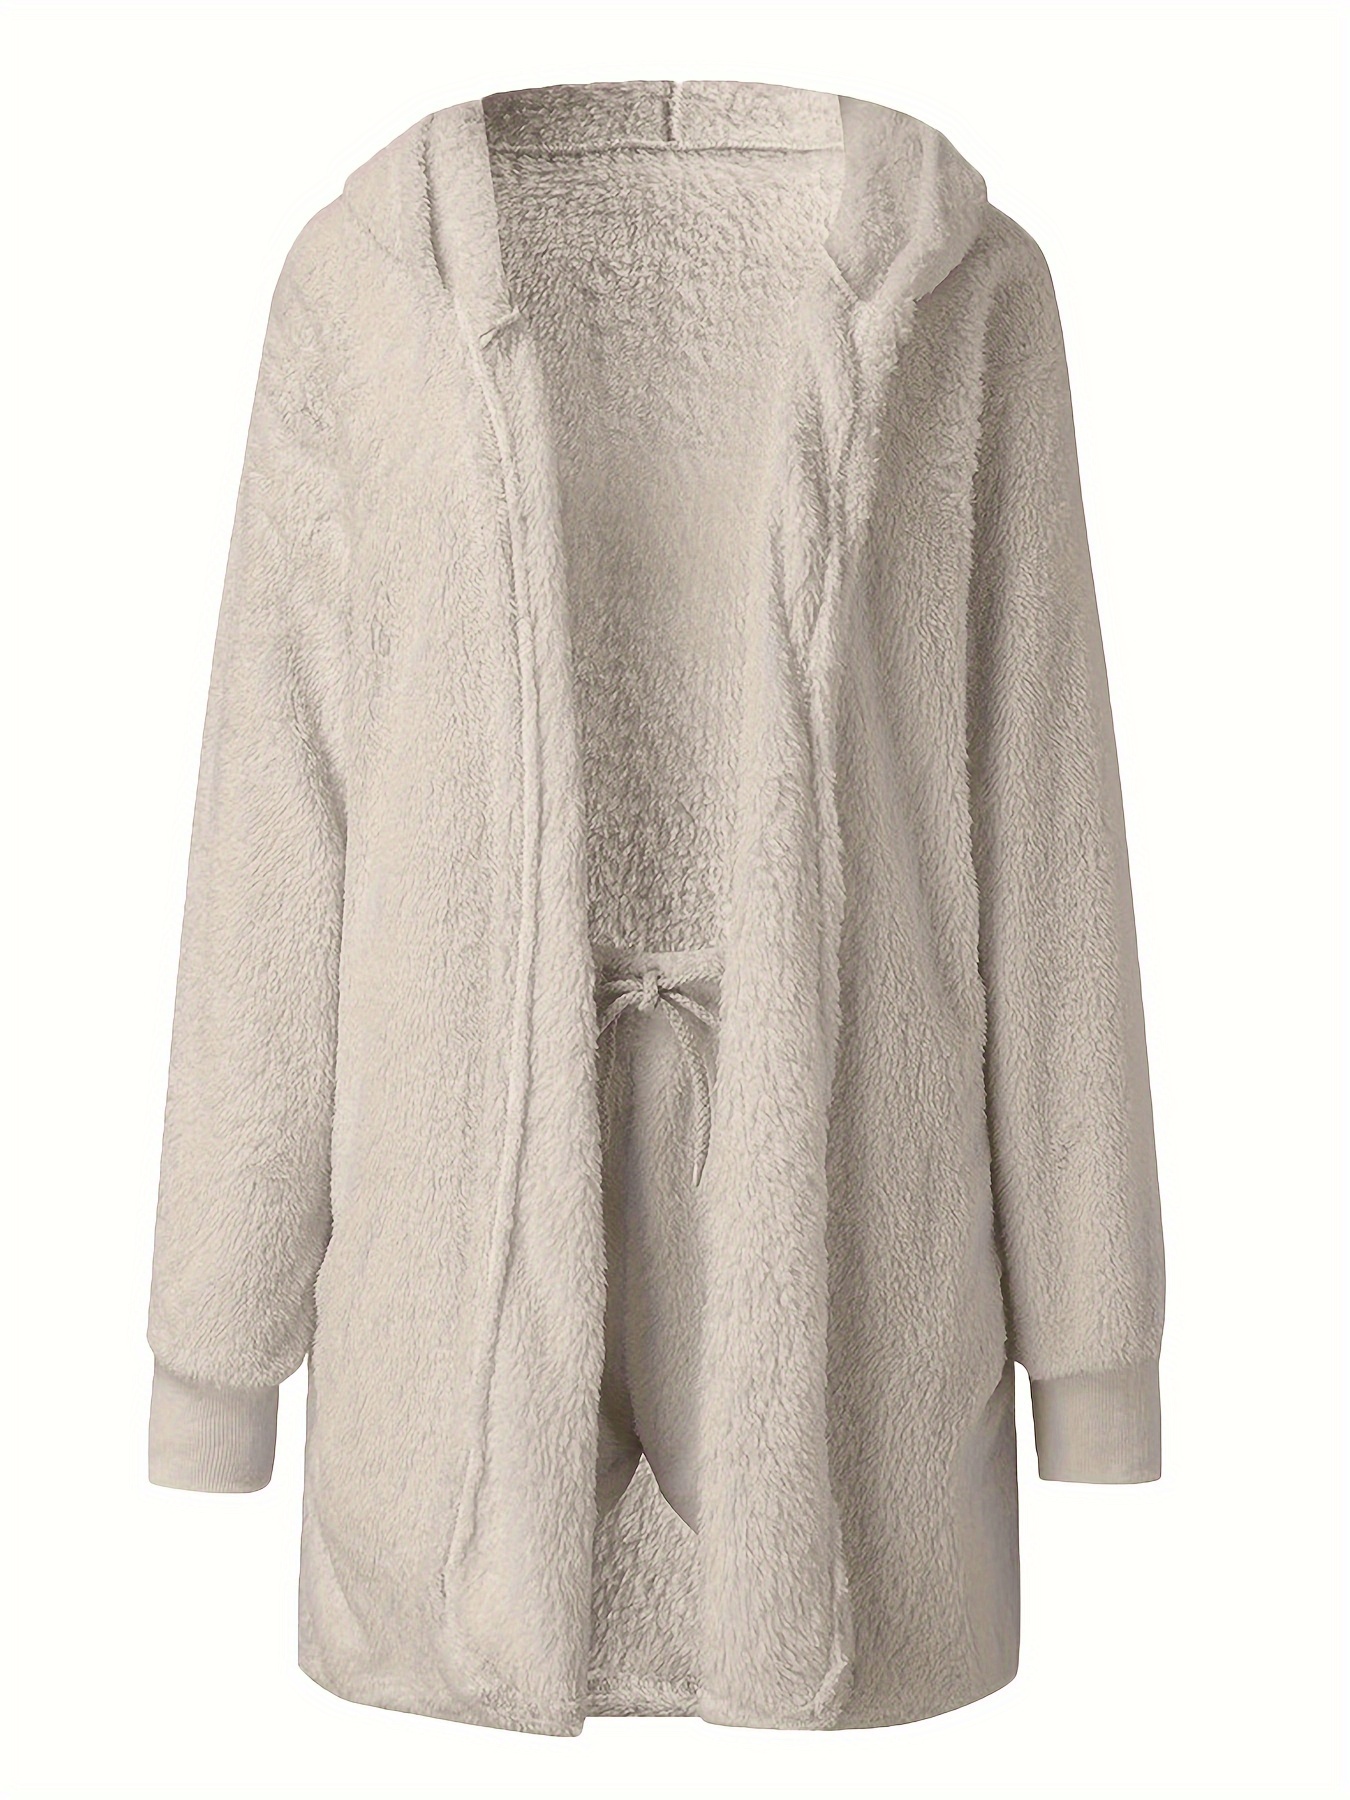 Warm Fuzzy Pajama Set, Long Sleeve Hooded Robe & Tank Top & Drawstring  Shorts, Women's Sleepwear & Loungewear